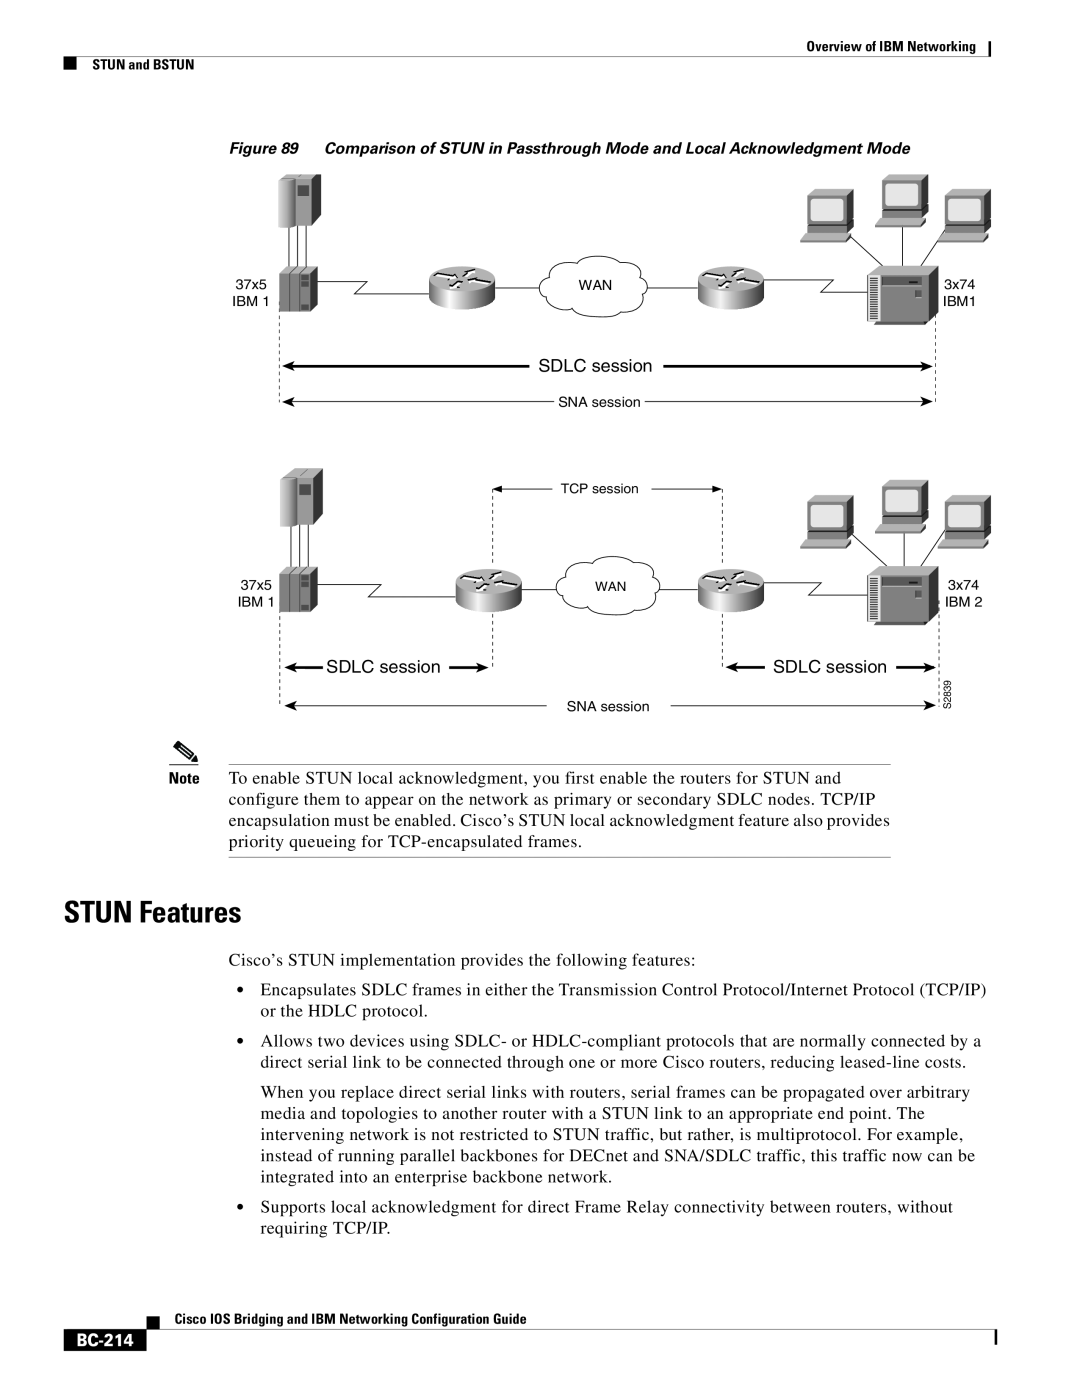 IBM BC-203 manual STUN Features, BC-214 